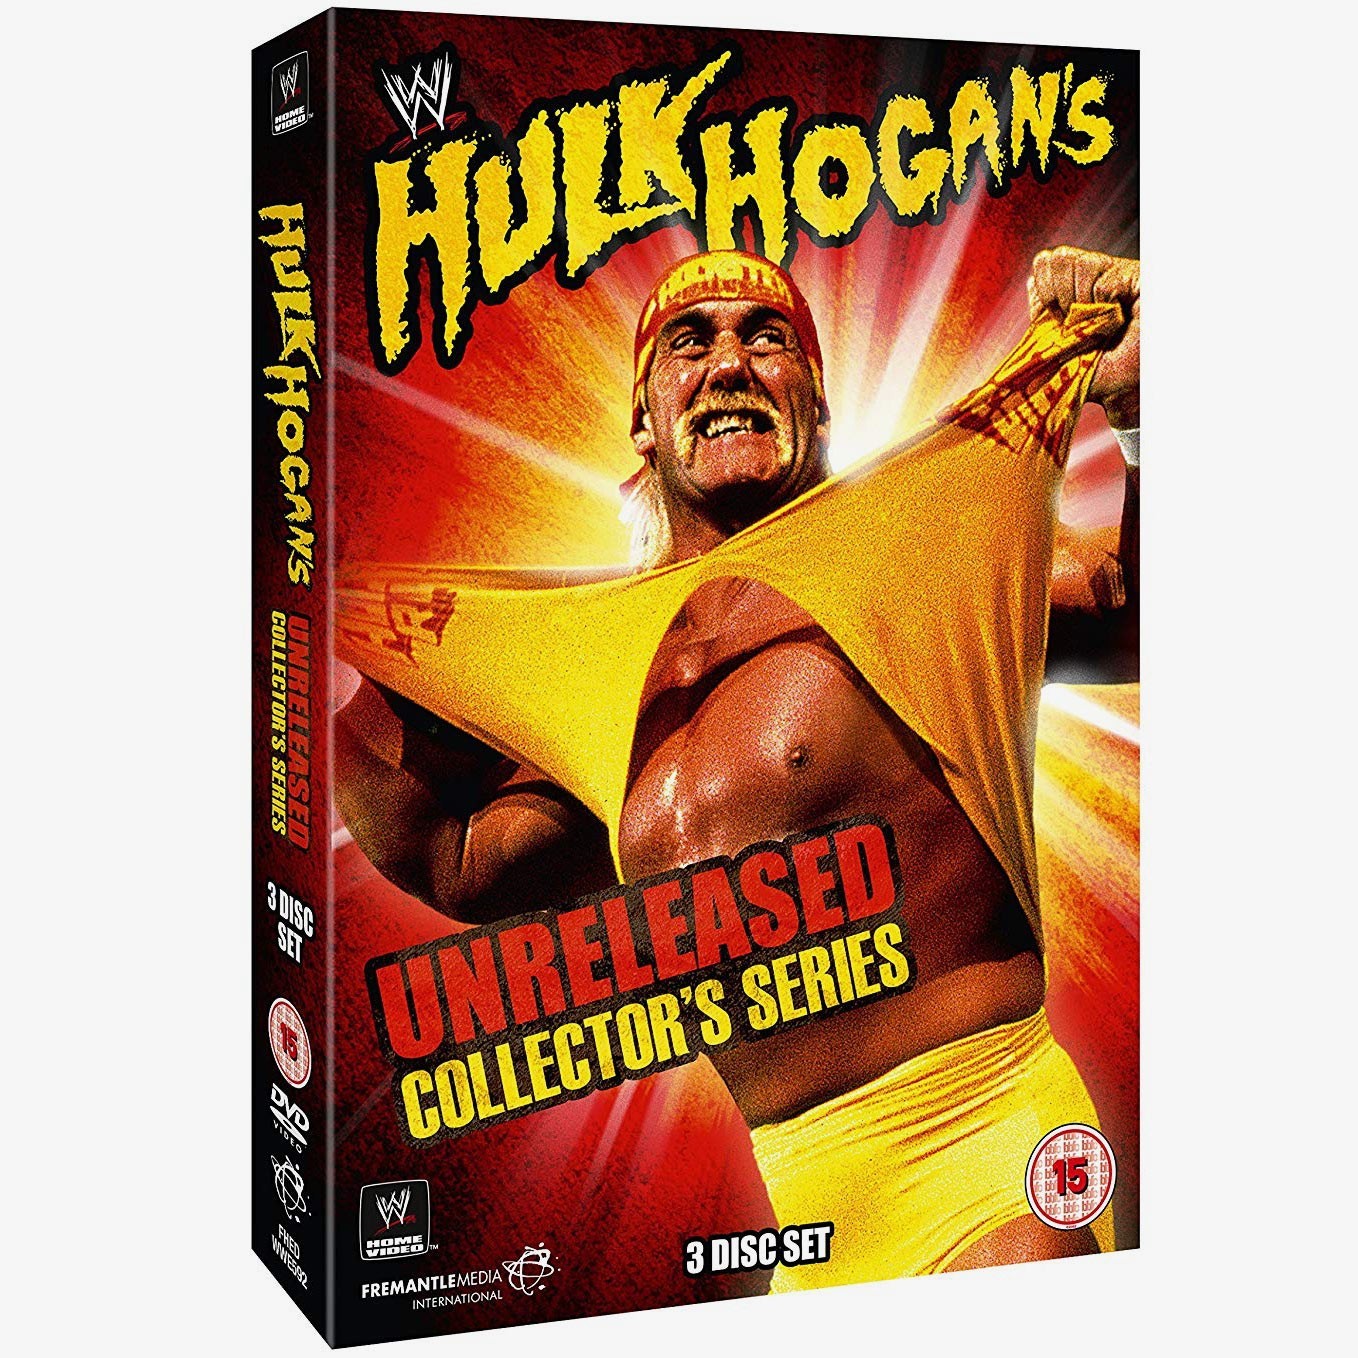 WWE Hulk Hogan's Unreleased Collector's Series DVD